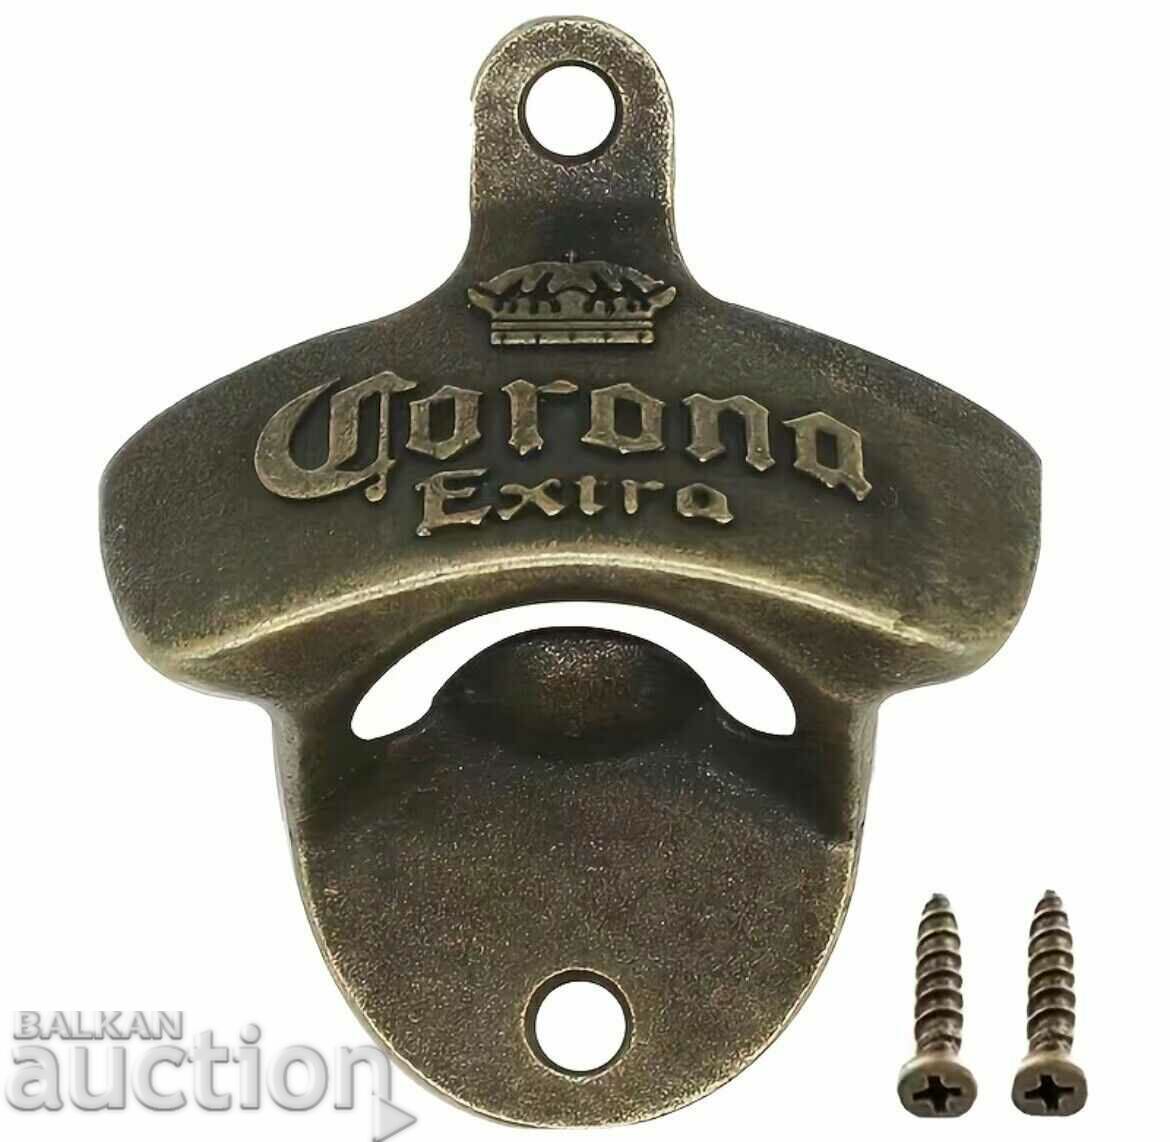 Deschidetor de bere metalic Corona Extra pentru sticle de bar de perete